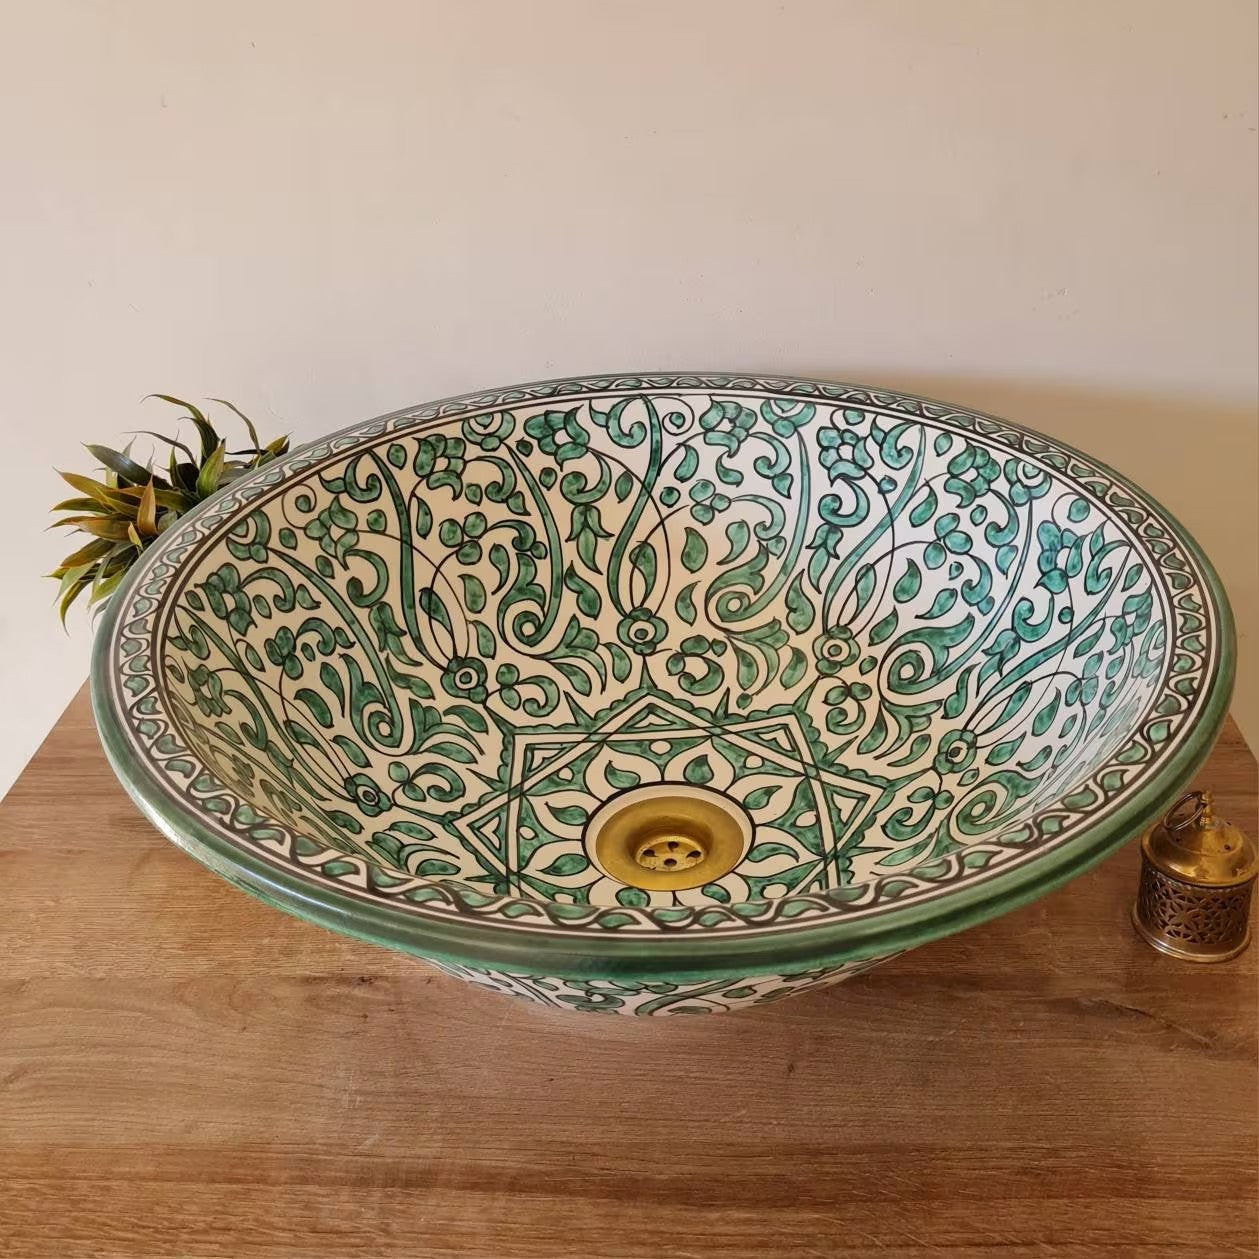 Moroccan sink | moroccan ceramic sink | bathroom sink | moroccan bathroom basin | cloakroom basin | Green sink #151